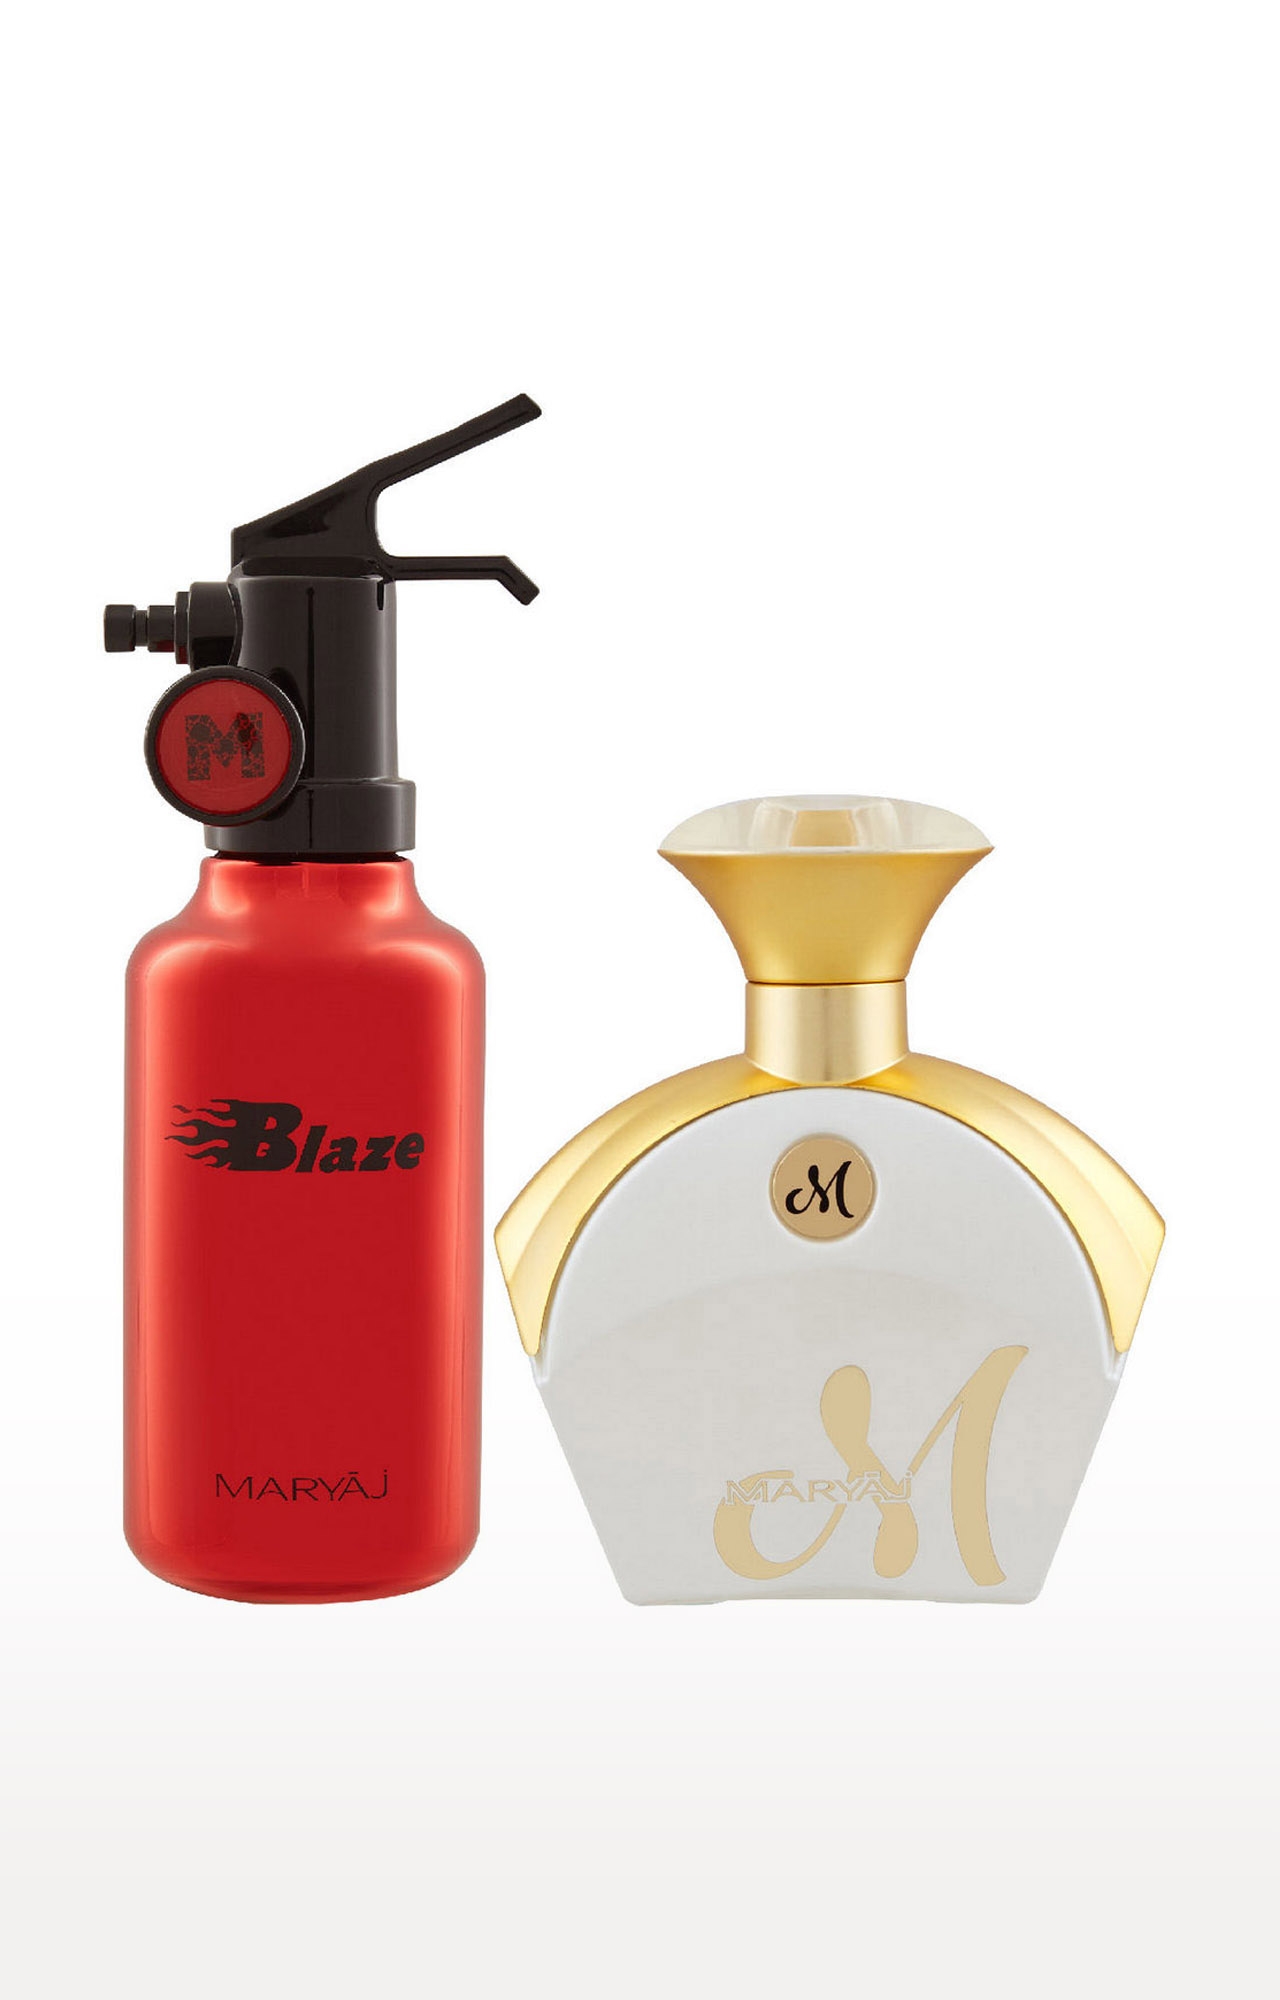 Maryaj Blaze Eau De Parfum Perfume 100ml for Men and Maryaj M White for Her Eau De Parfum Fruity Perfume 90ml for Women